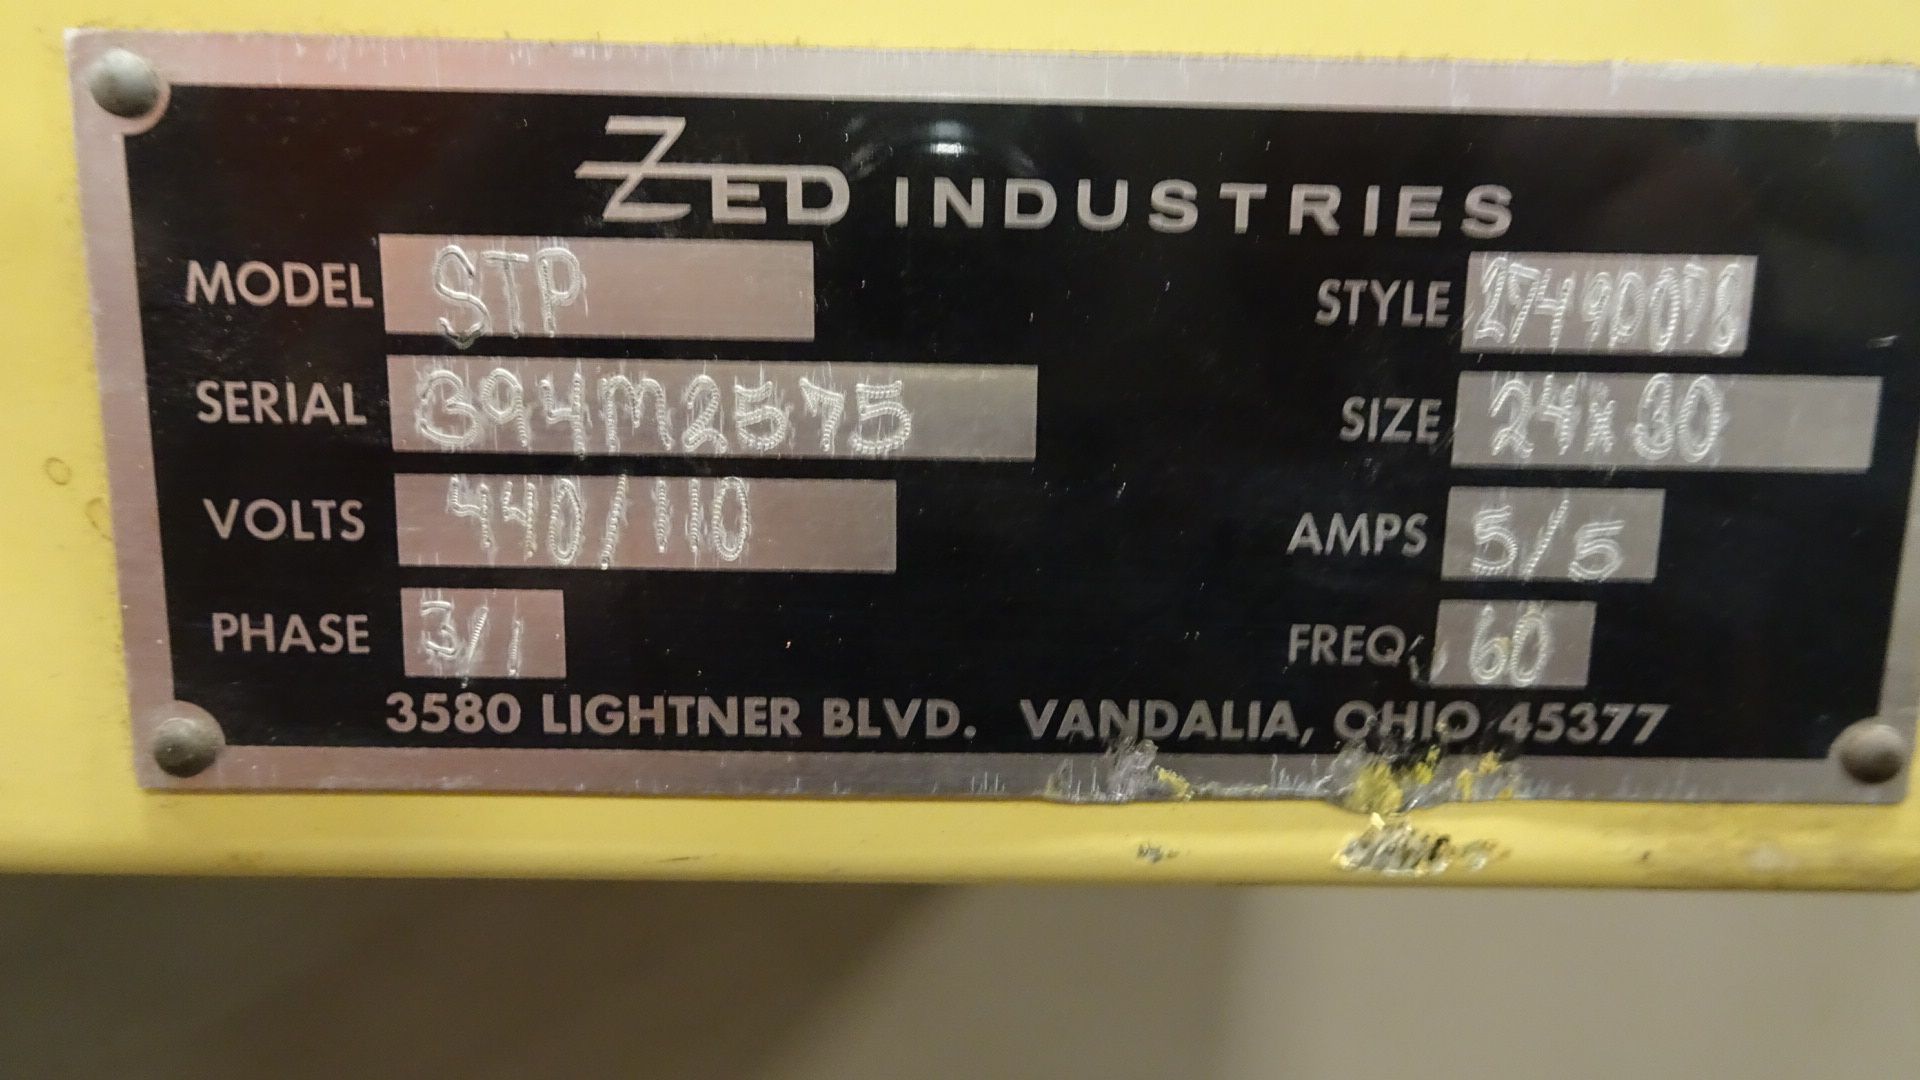 Zed Industries Model 365 In-Line Blister Packaging/Sealer, Style 5757, Size 24'' x 30'', with Zed - Bild 7 aus 7